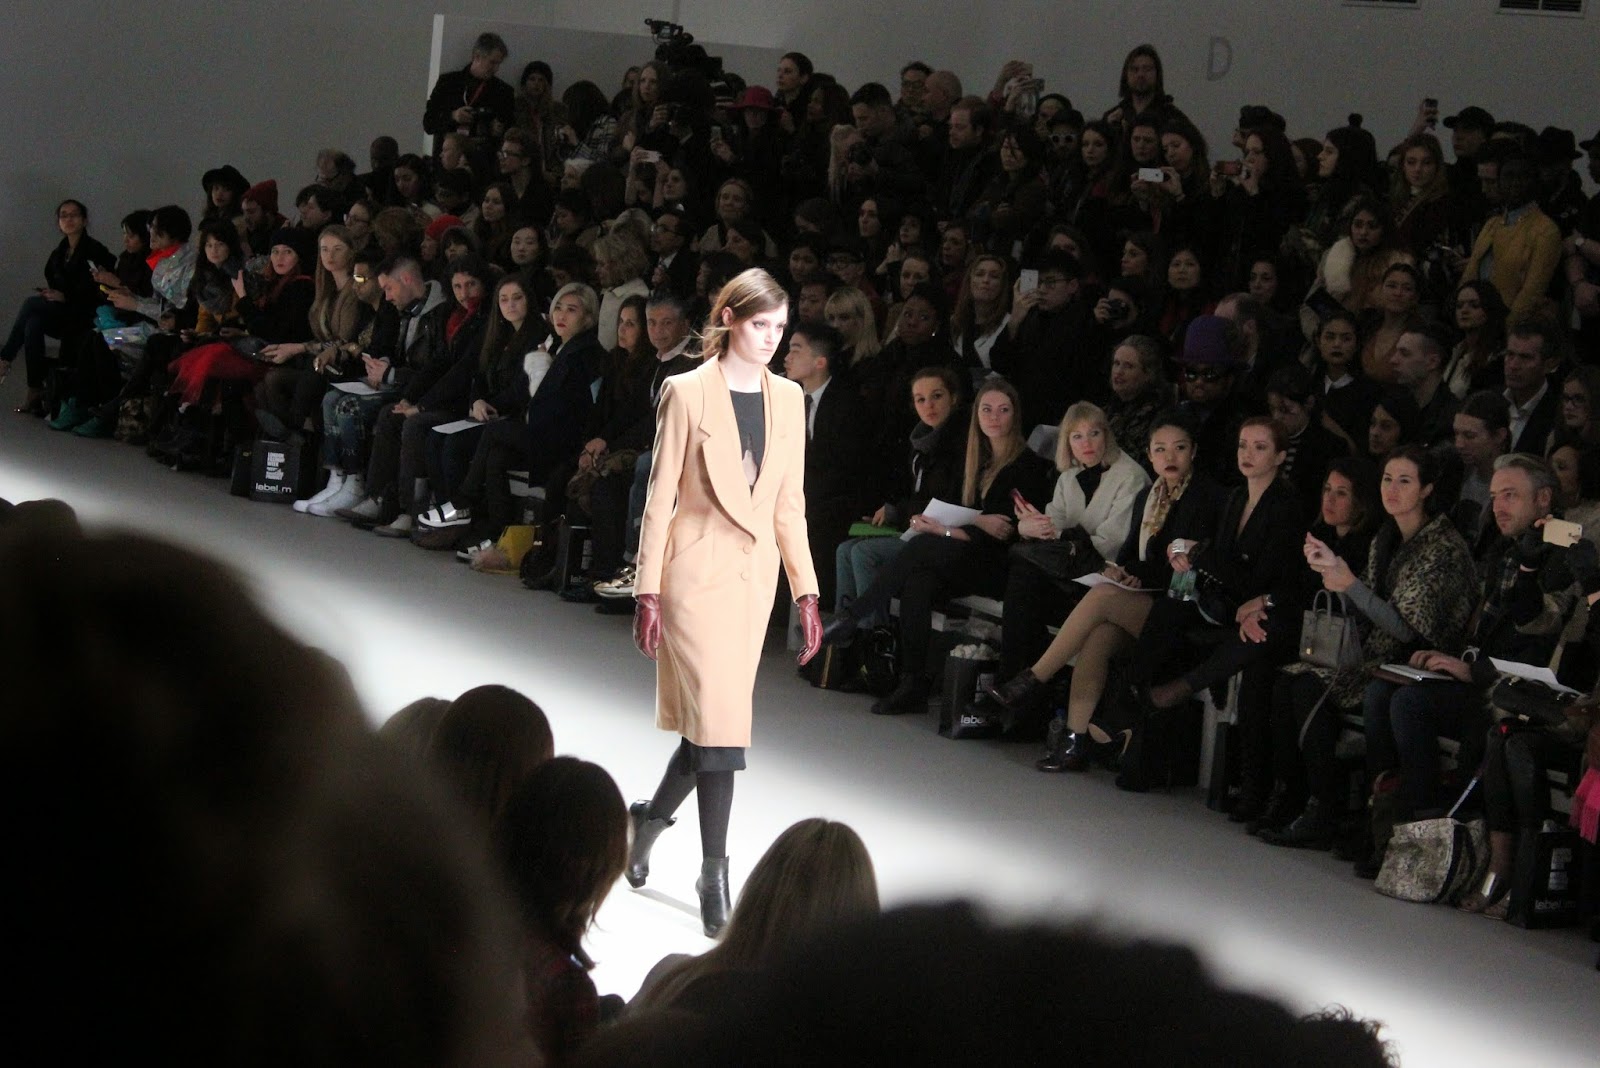 london-fashion-week-lfw-jean-pierre-braganza-catwalk-models-somerset-house